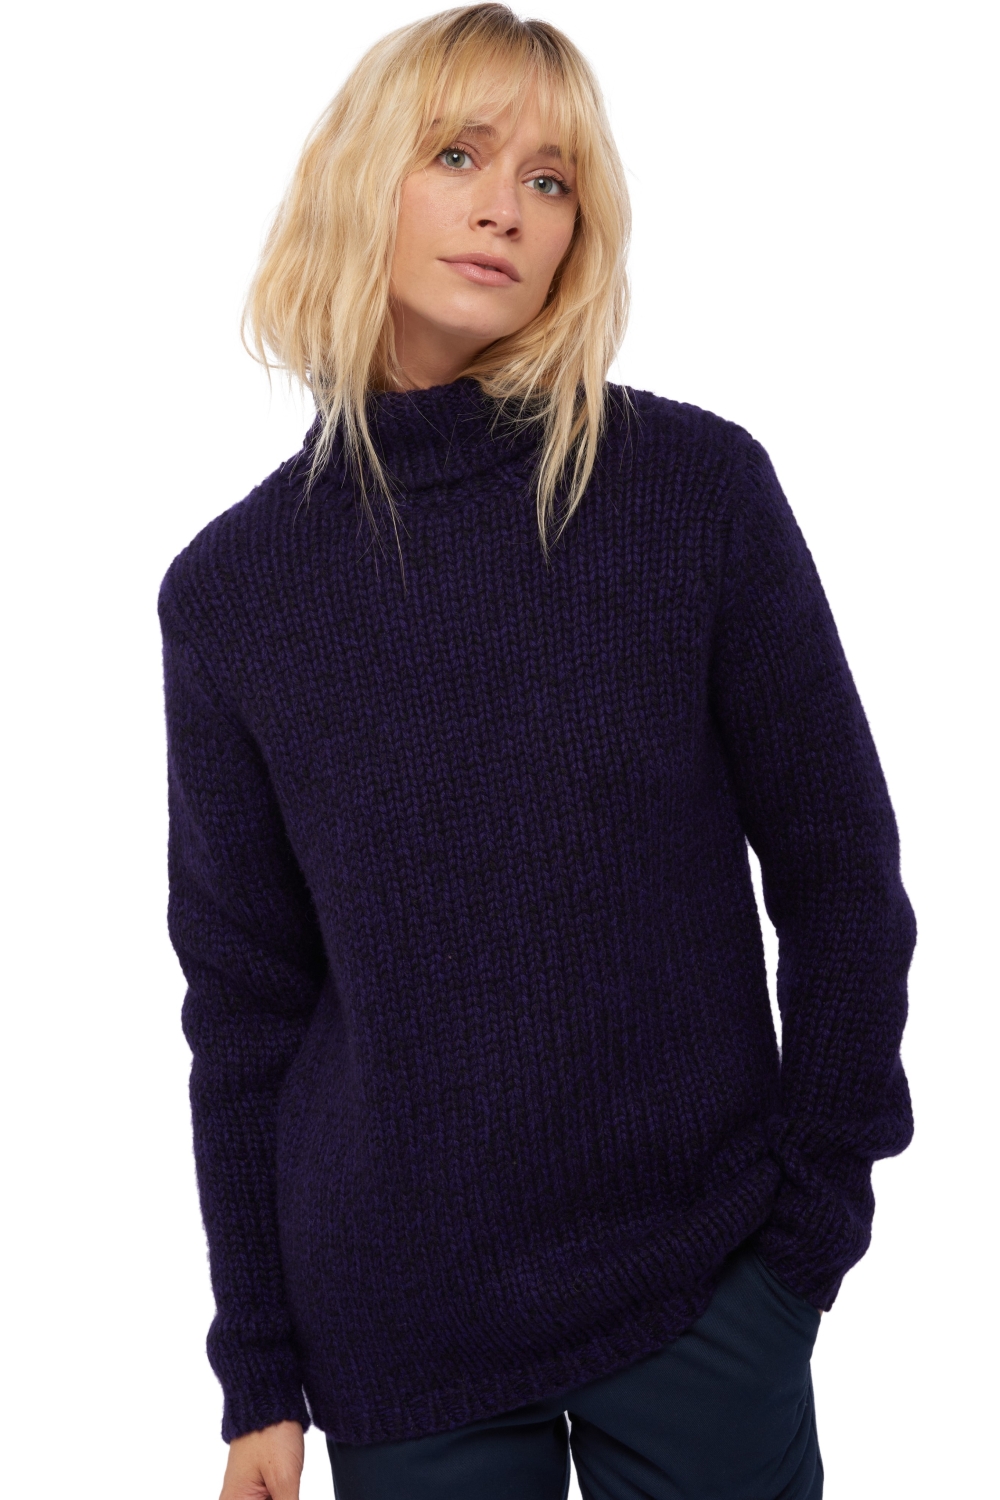 Cashmere ladies chunky sweater vicenza black deep purple xl